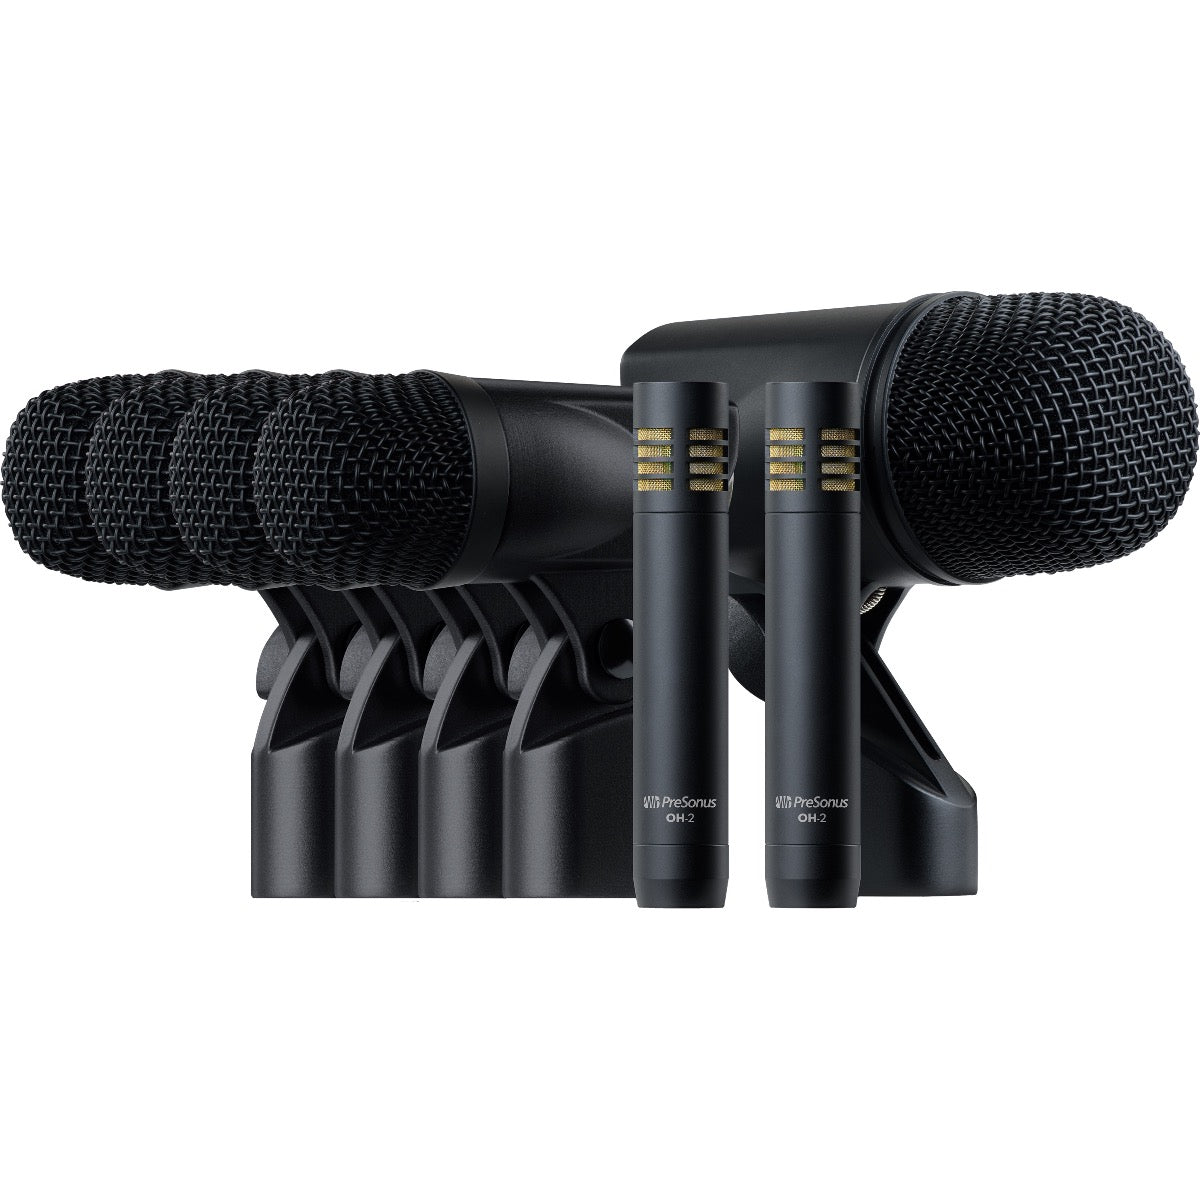 Combined group image of PreSonus DM-7 Drum Microphone Set microphones